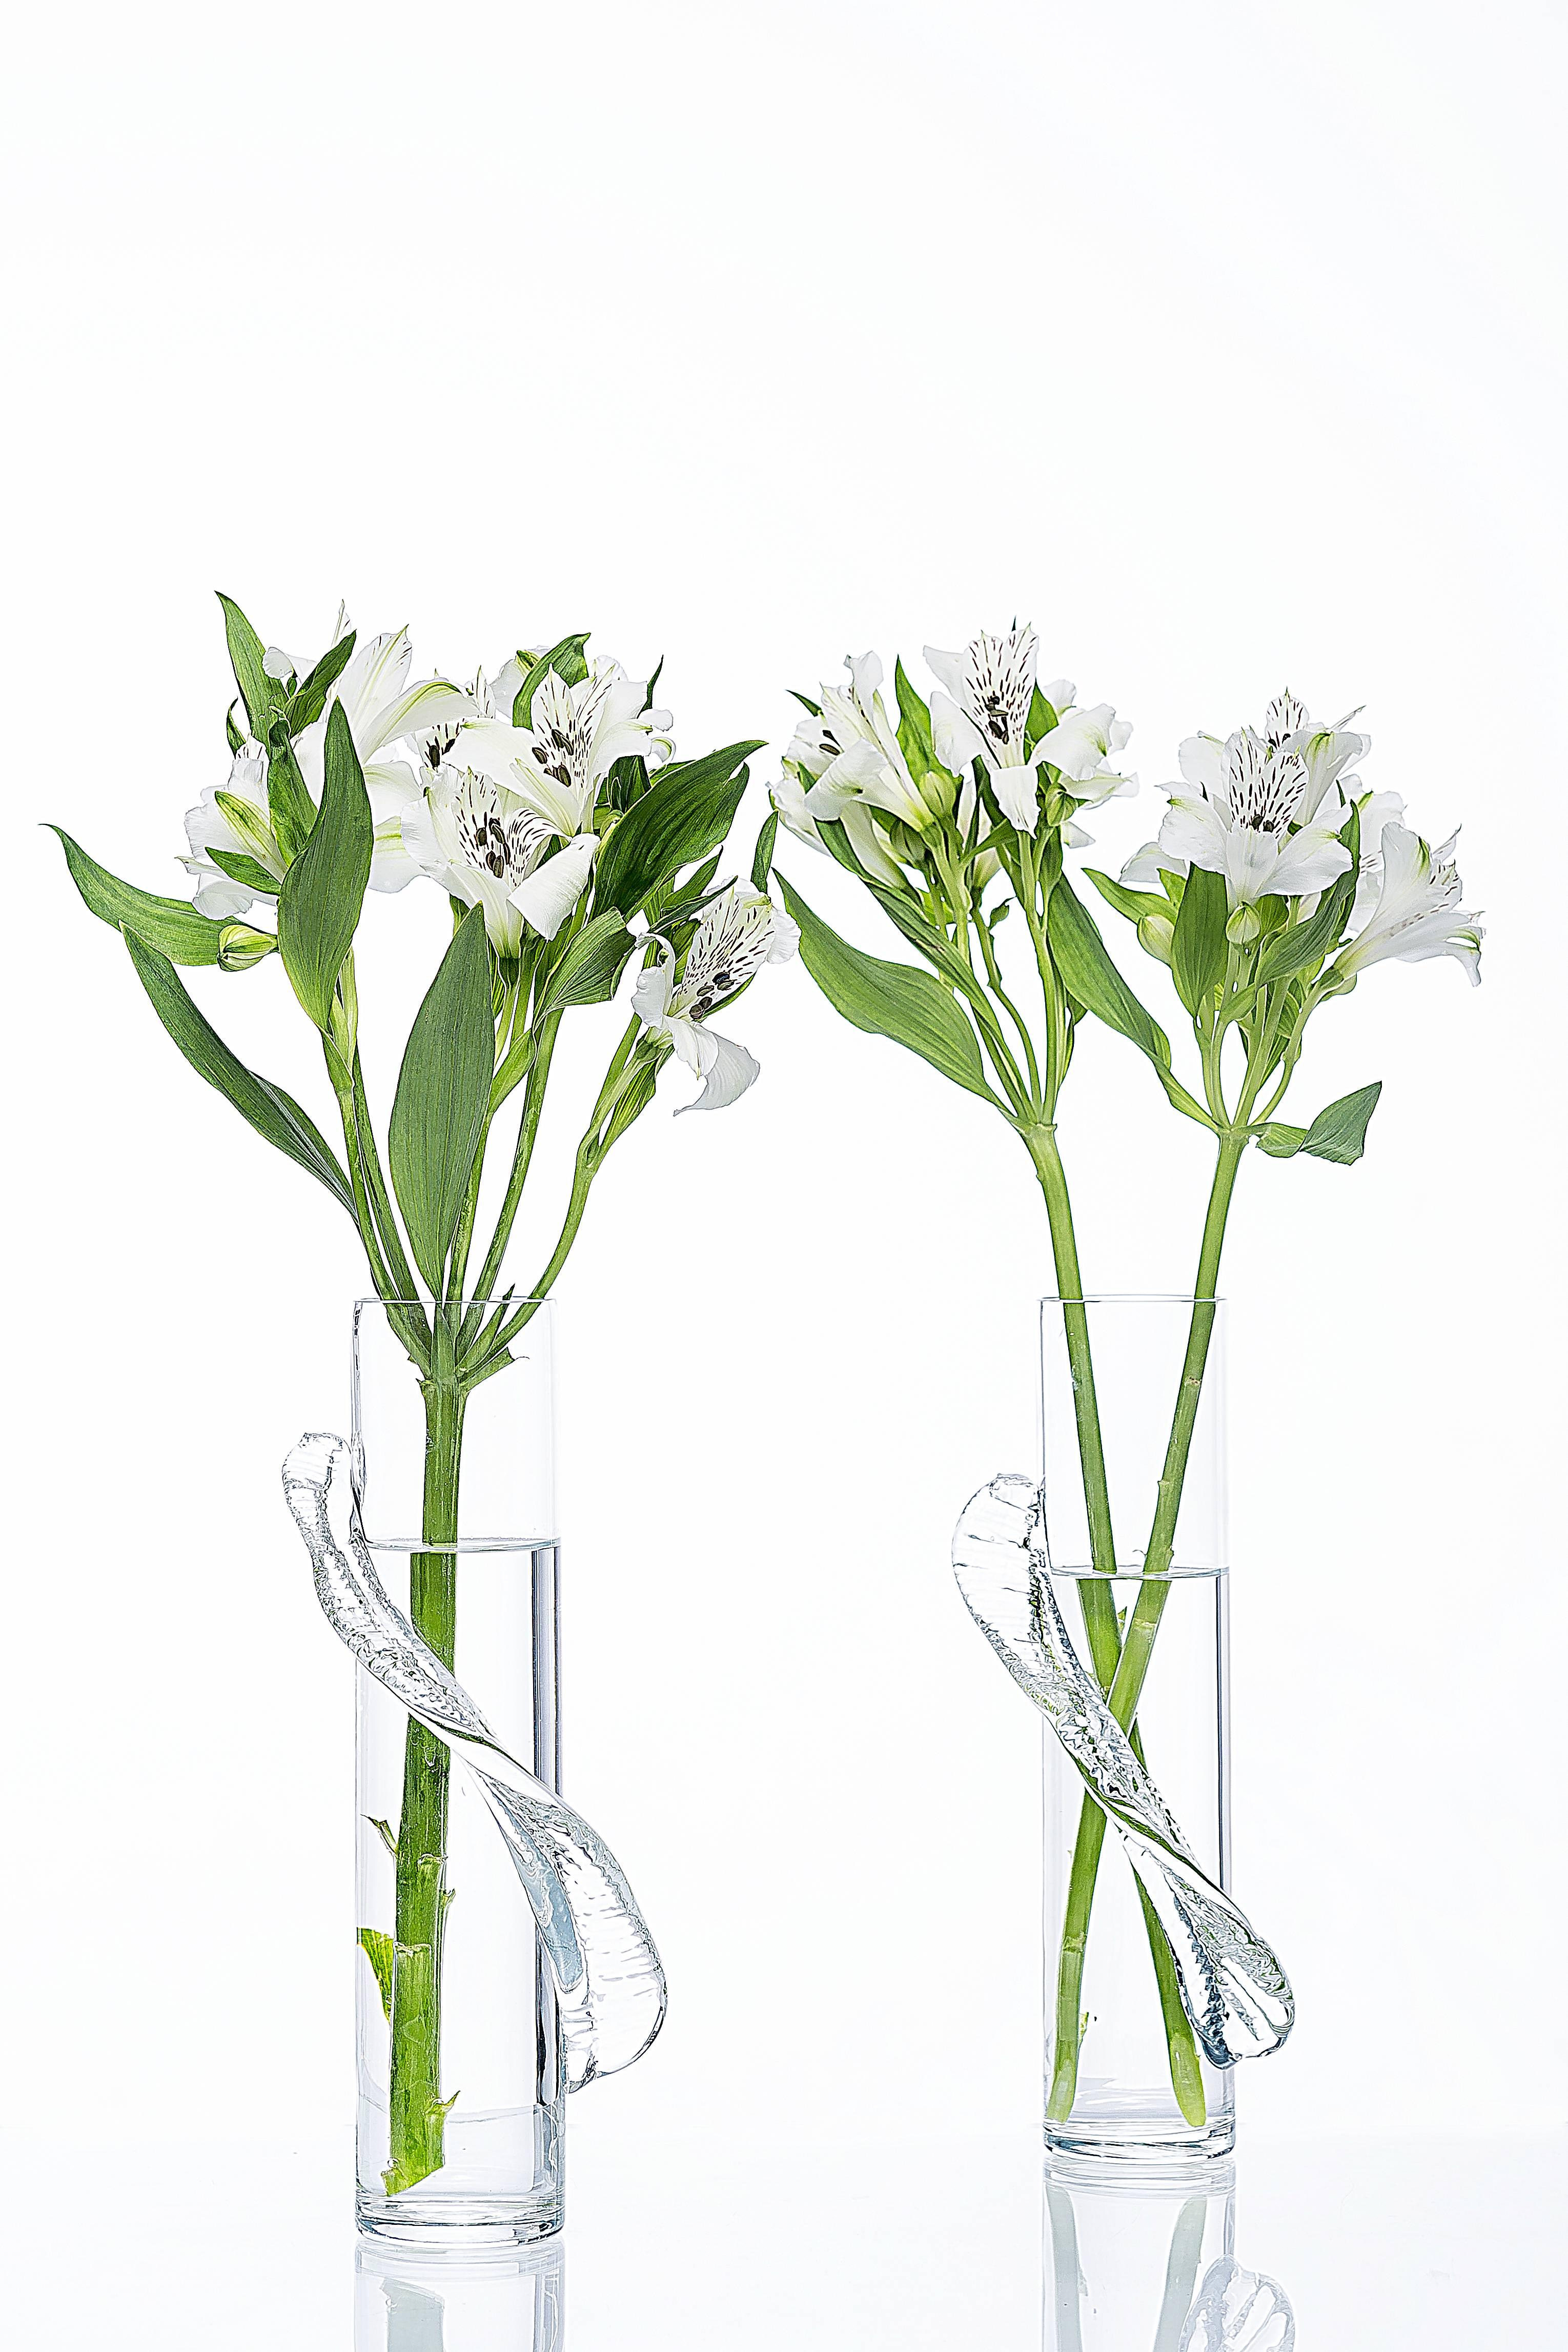 Organic Modern Glass Flower Vase, Transparent, Brazilian Design For Sale